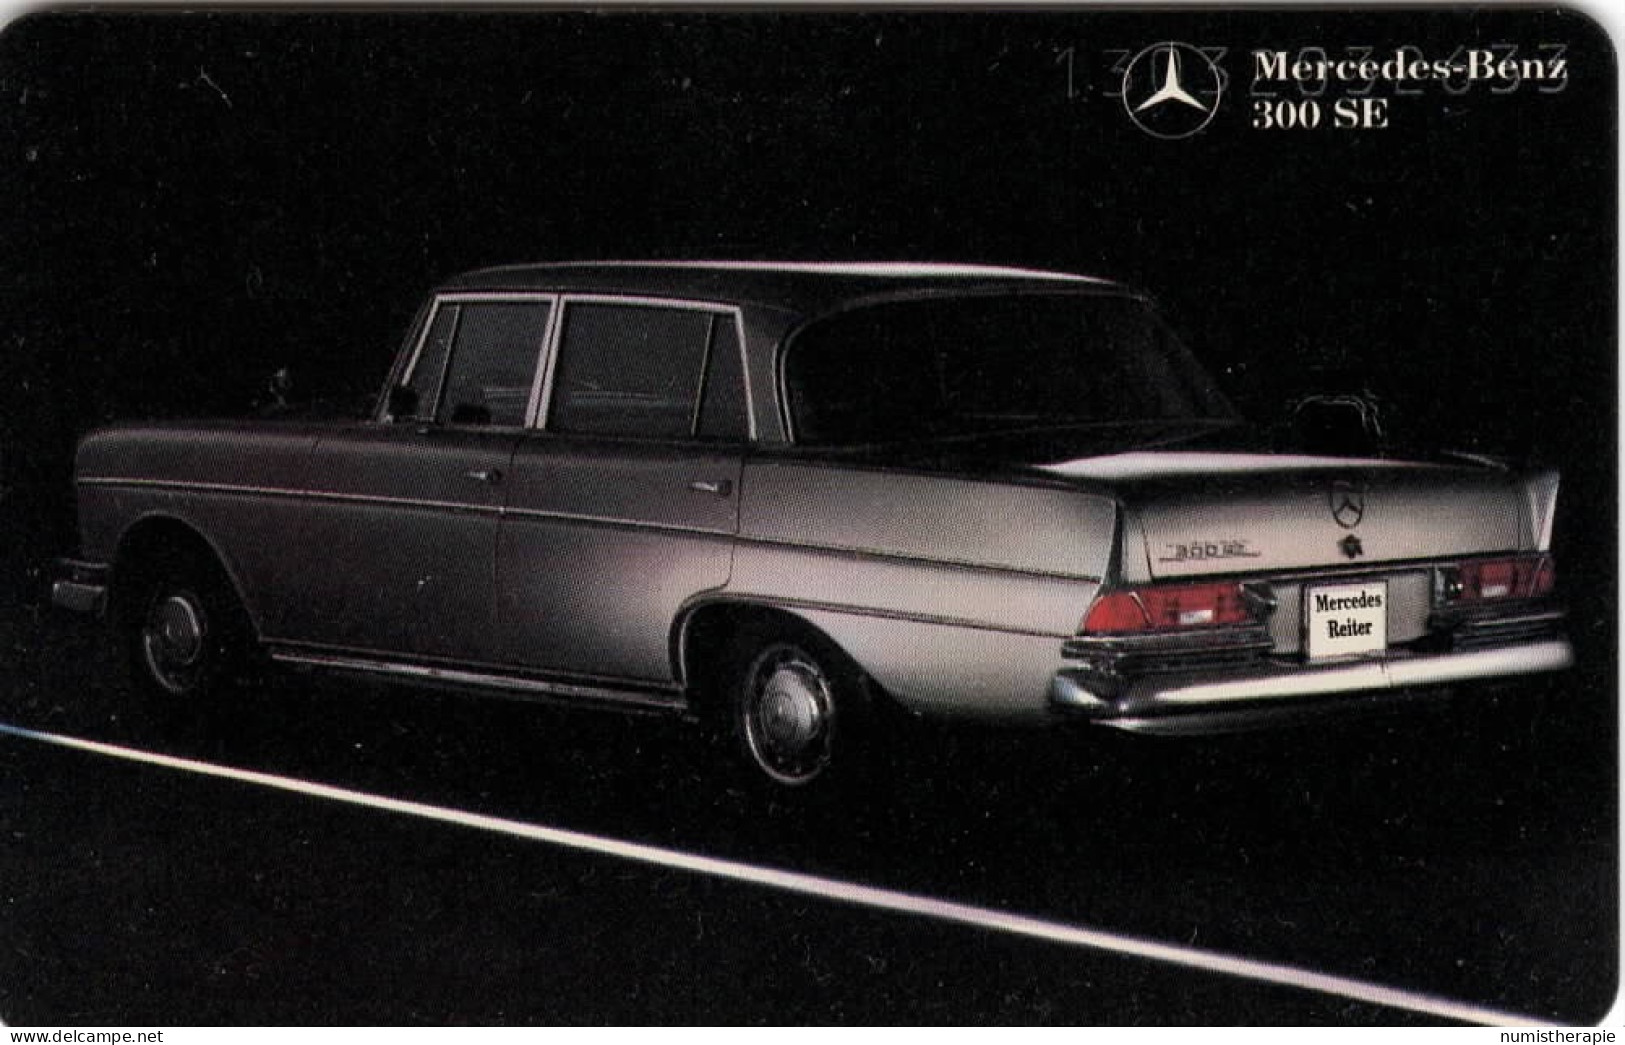 Mercedez Benz 300 SE : Telefonkarte 6 DM 1993 - Voitures